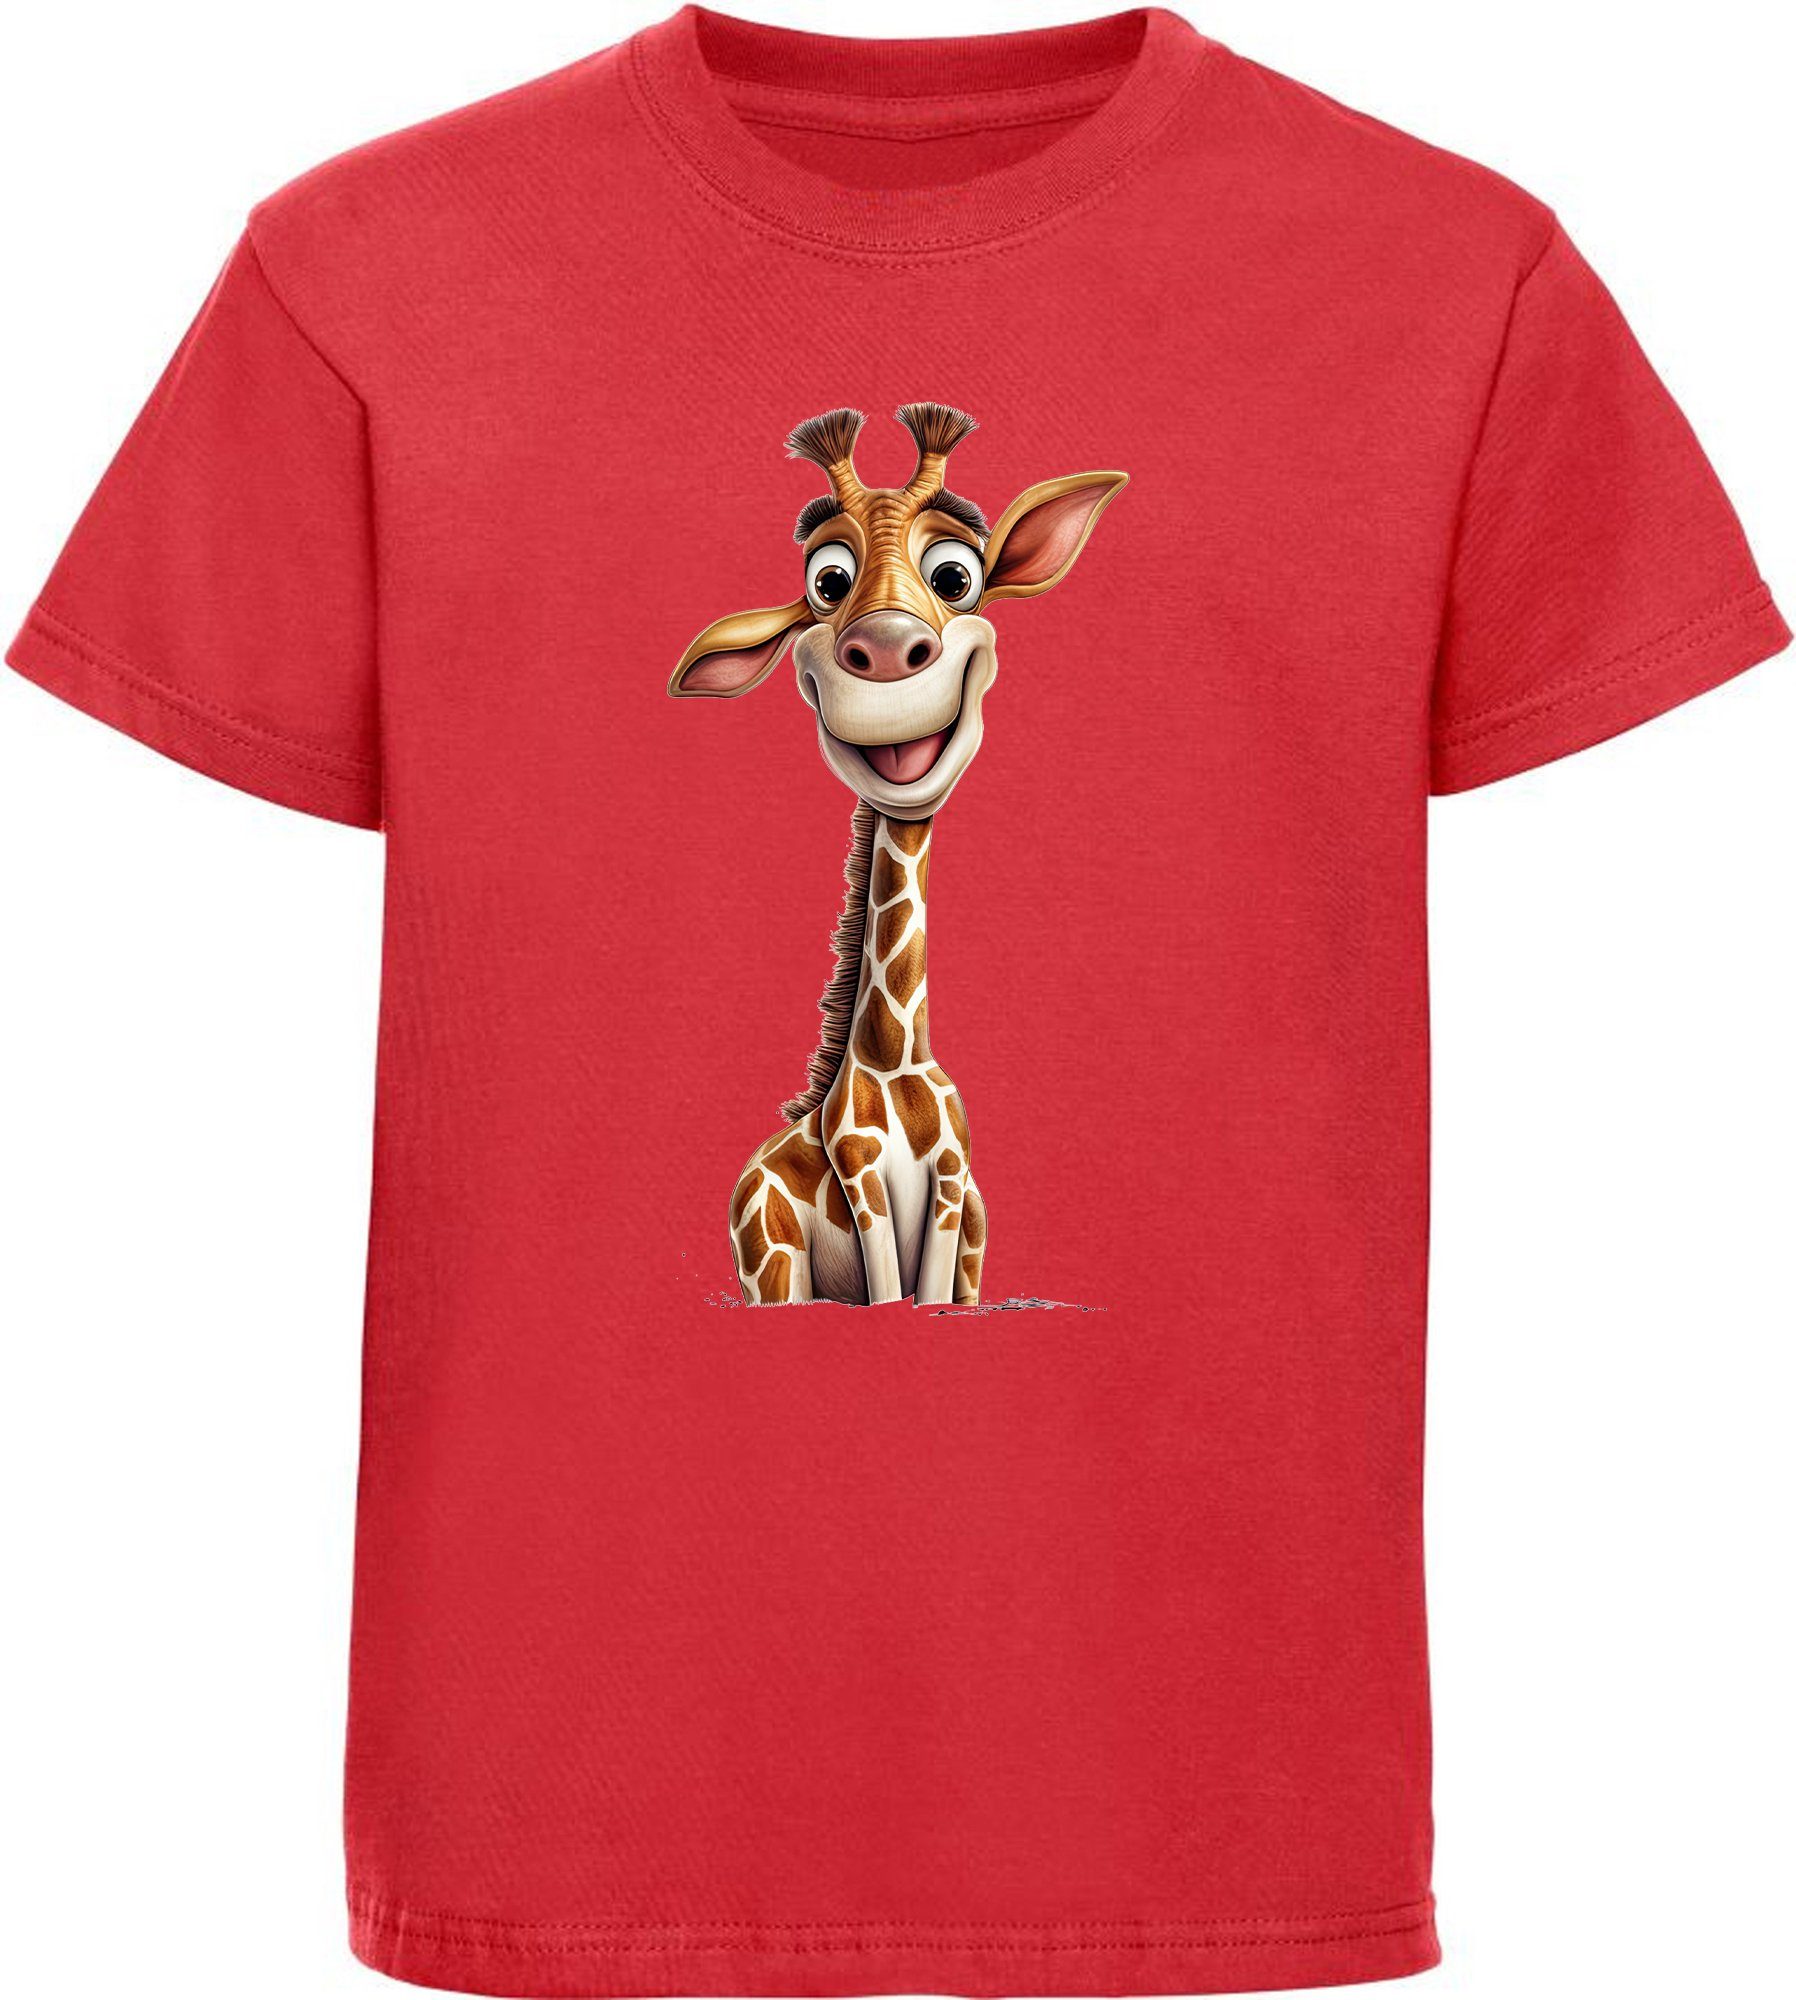 Giraffe - i273 MyDesign24 Kinder T-Shirt rot bedruckt Baby Aufdruck, Wildtier Baumwollshirt Shirt Print mit